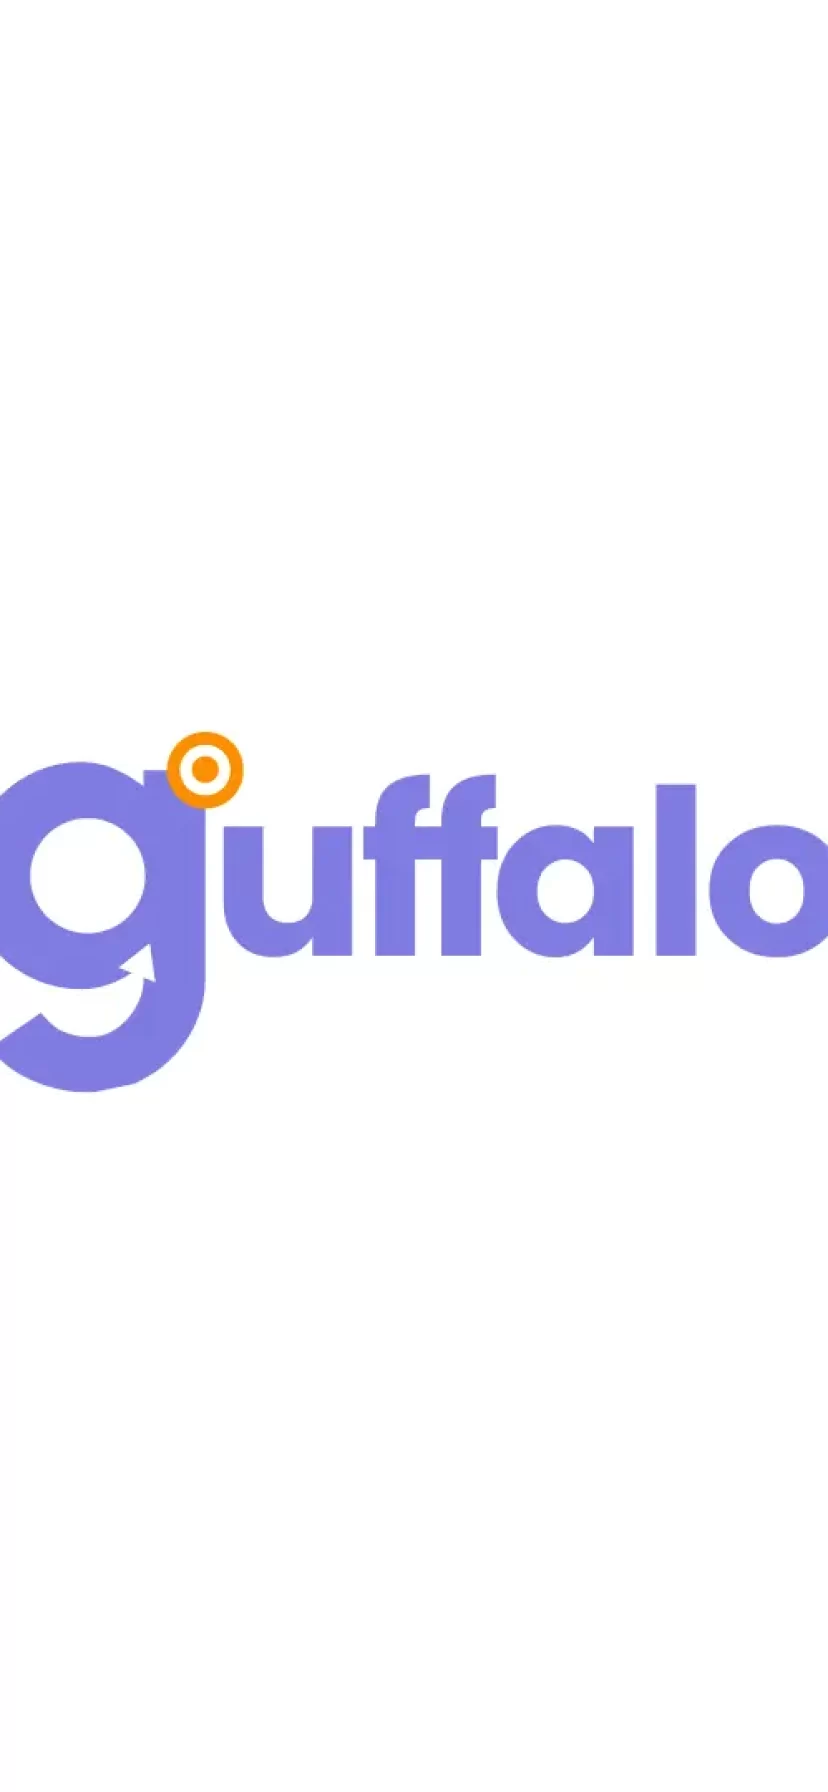 Guffalo.com Domain Name For Sale